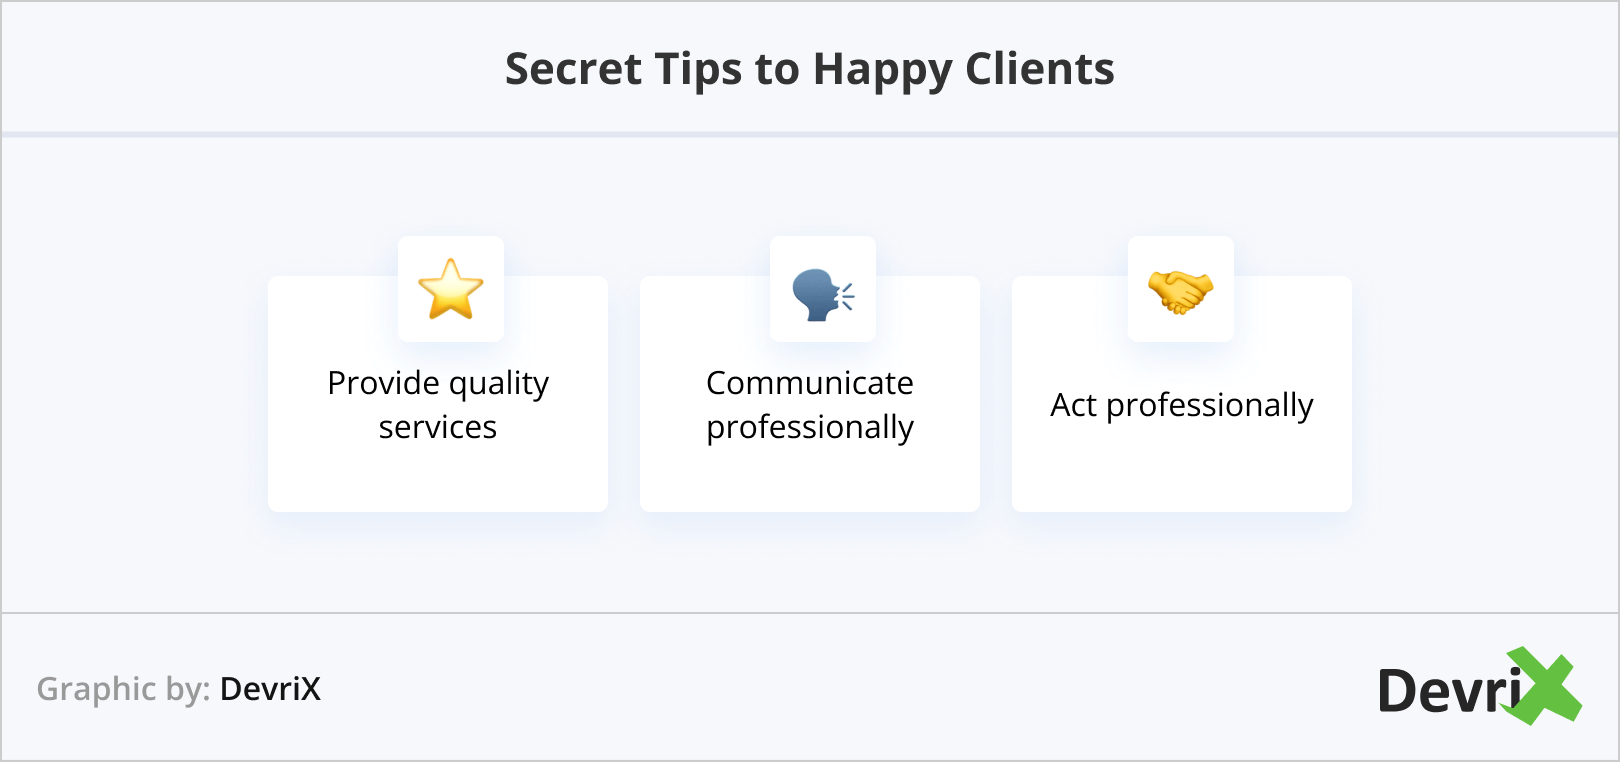 Secret Tips to Happy Clients